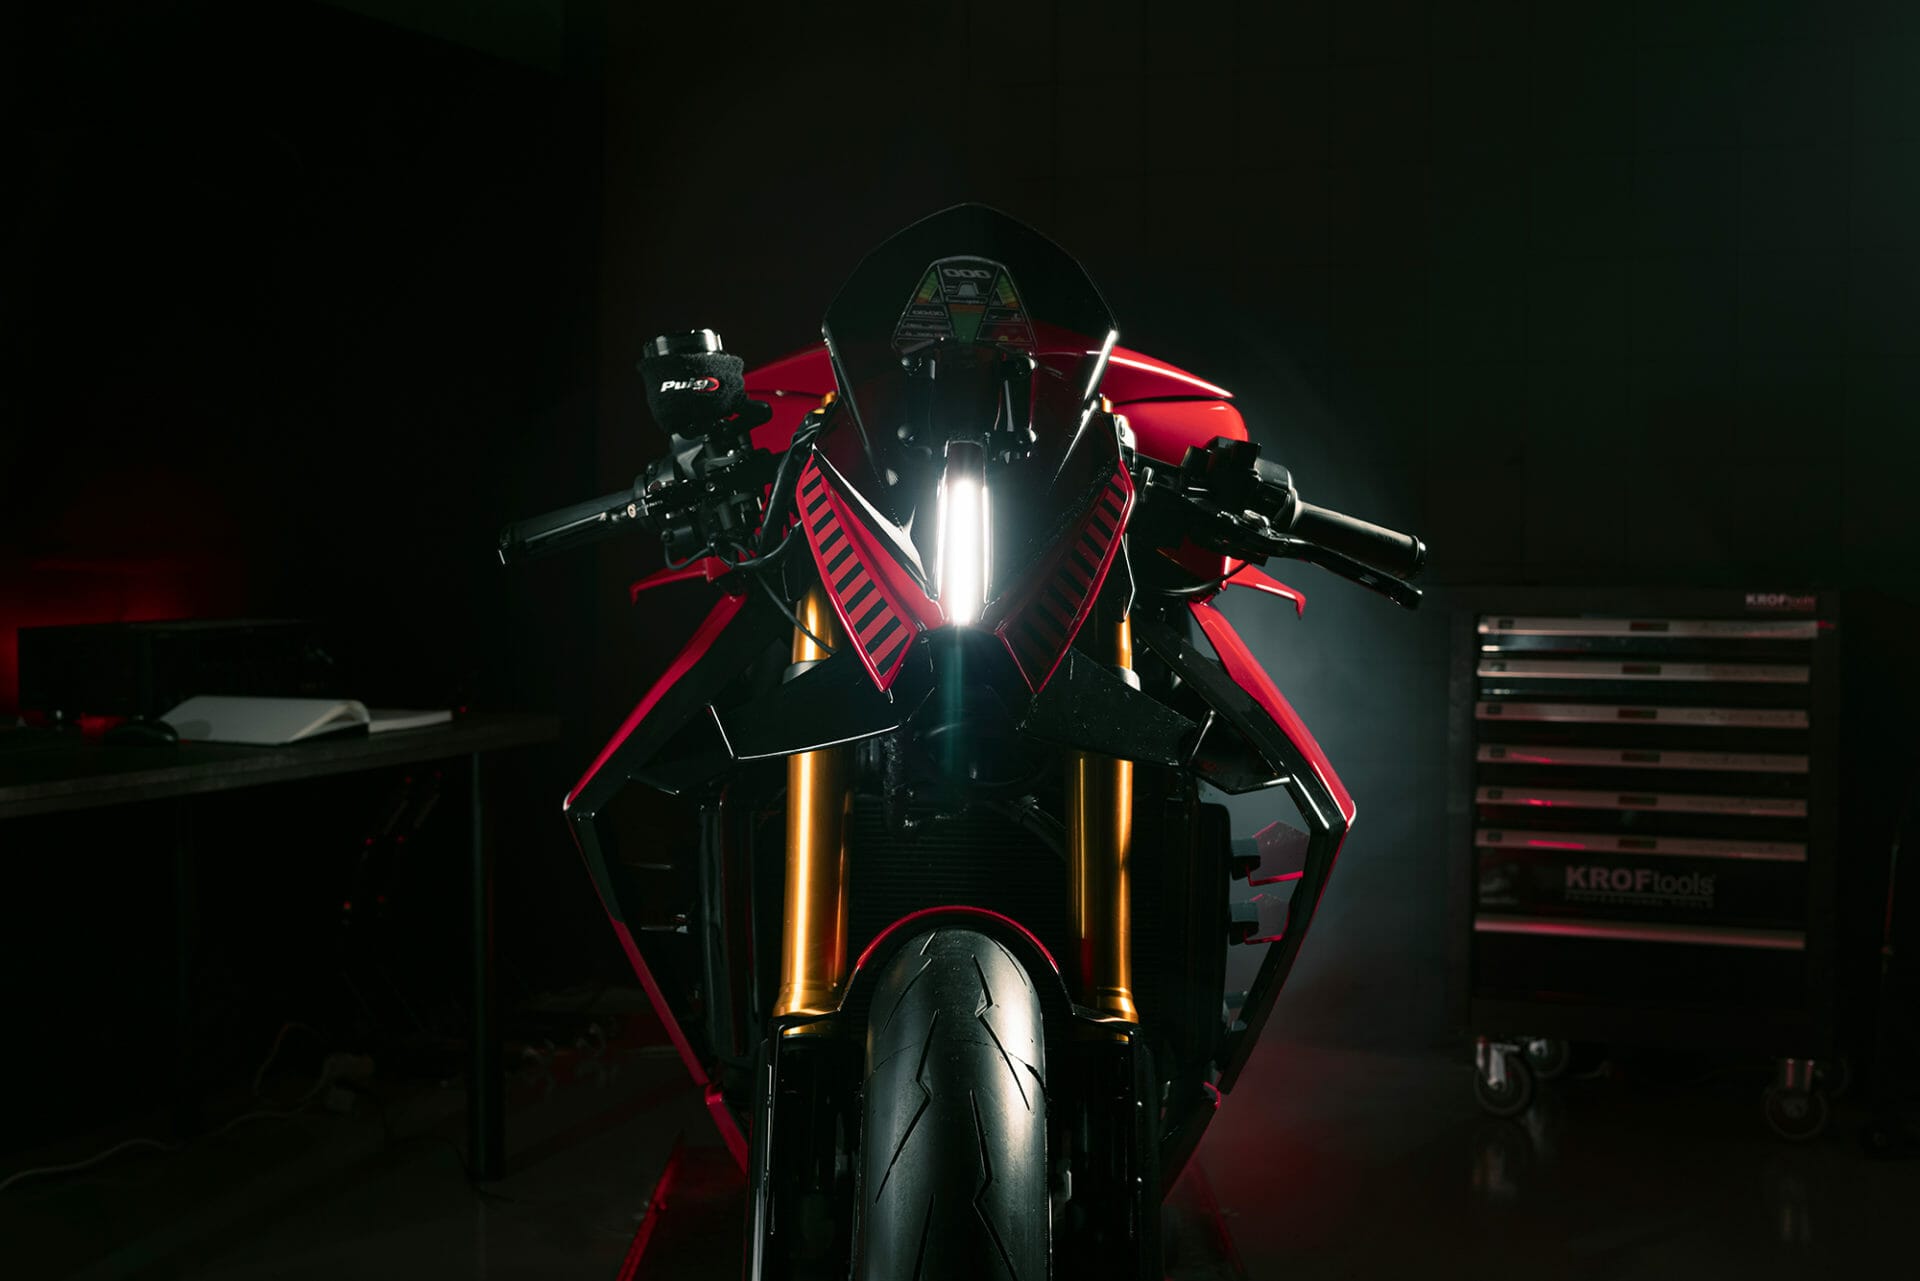 Puig transforms naked bike into futuristic superbike - Puig Diablo
- MOTORCYCLES.NEWS via @motorradnachrichten